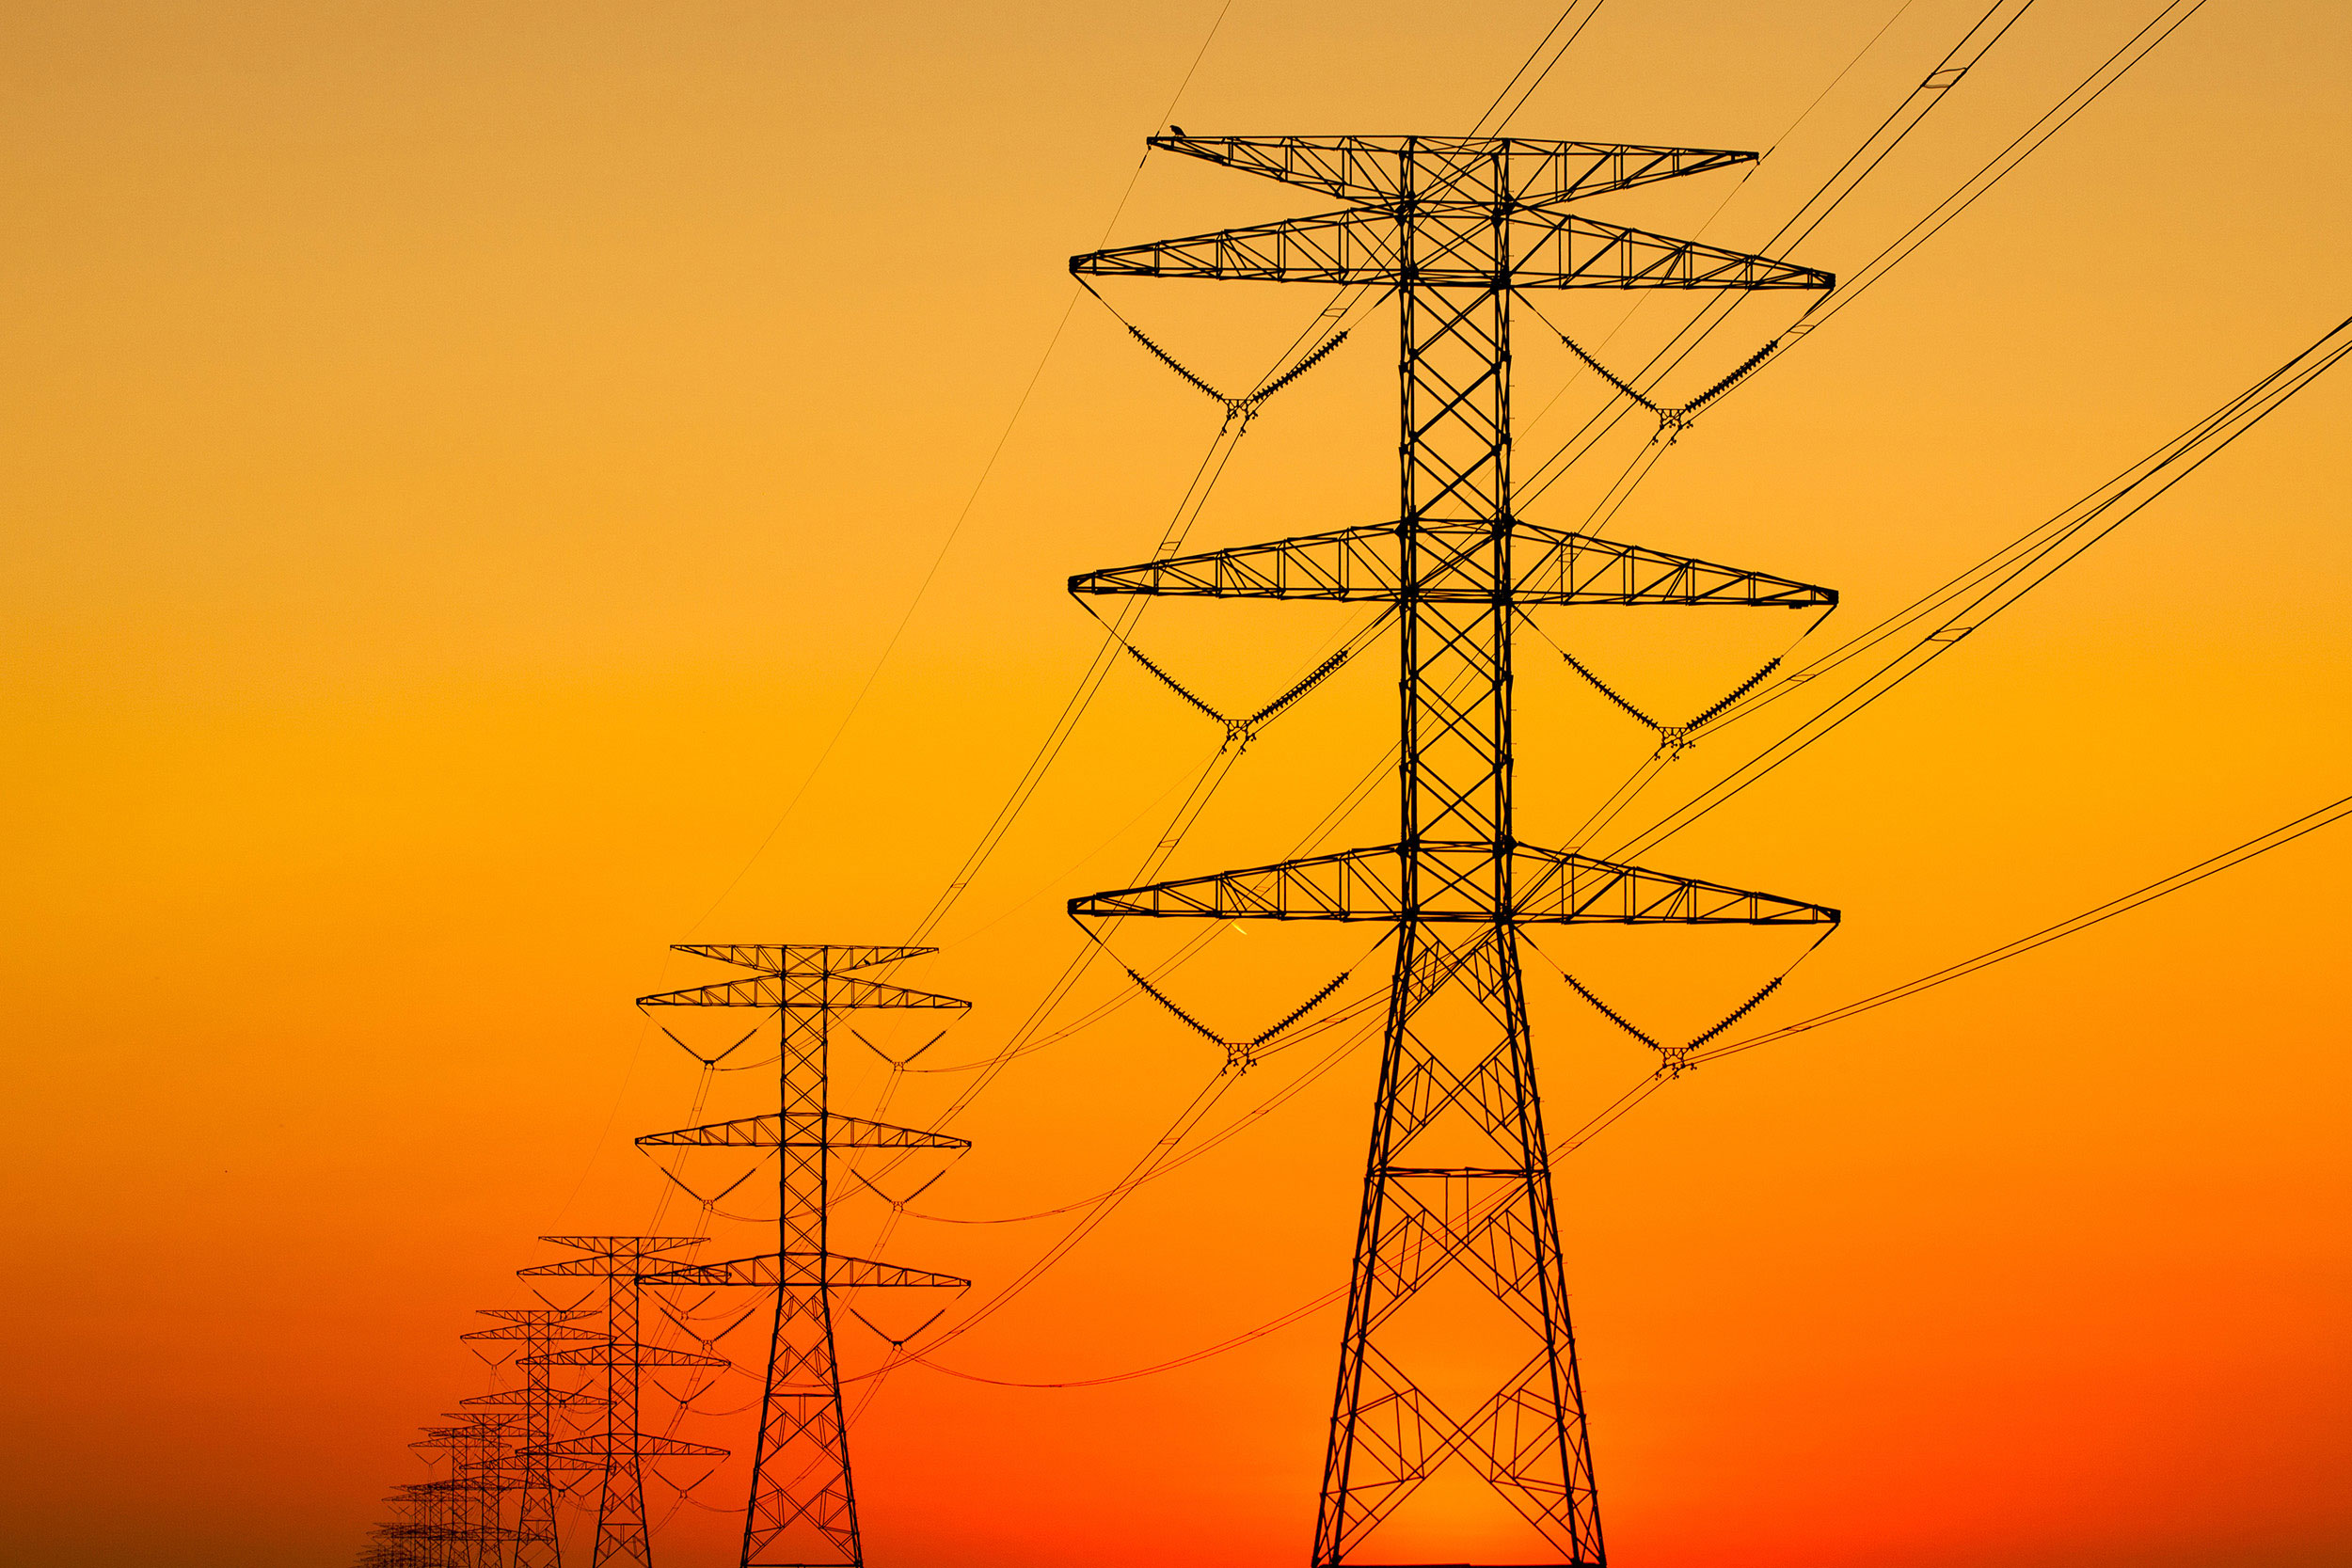 A large string of powerlines set against a brilliant orange sunset